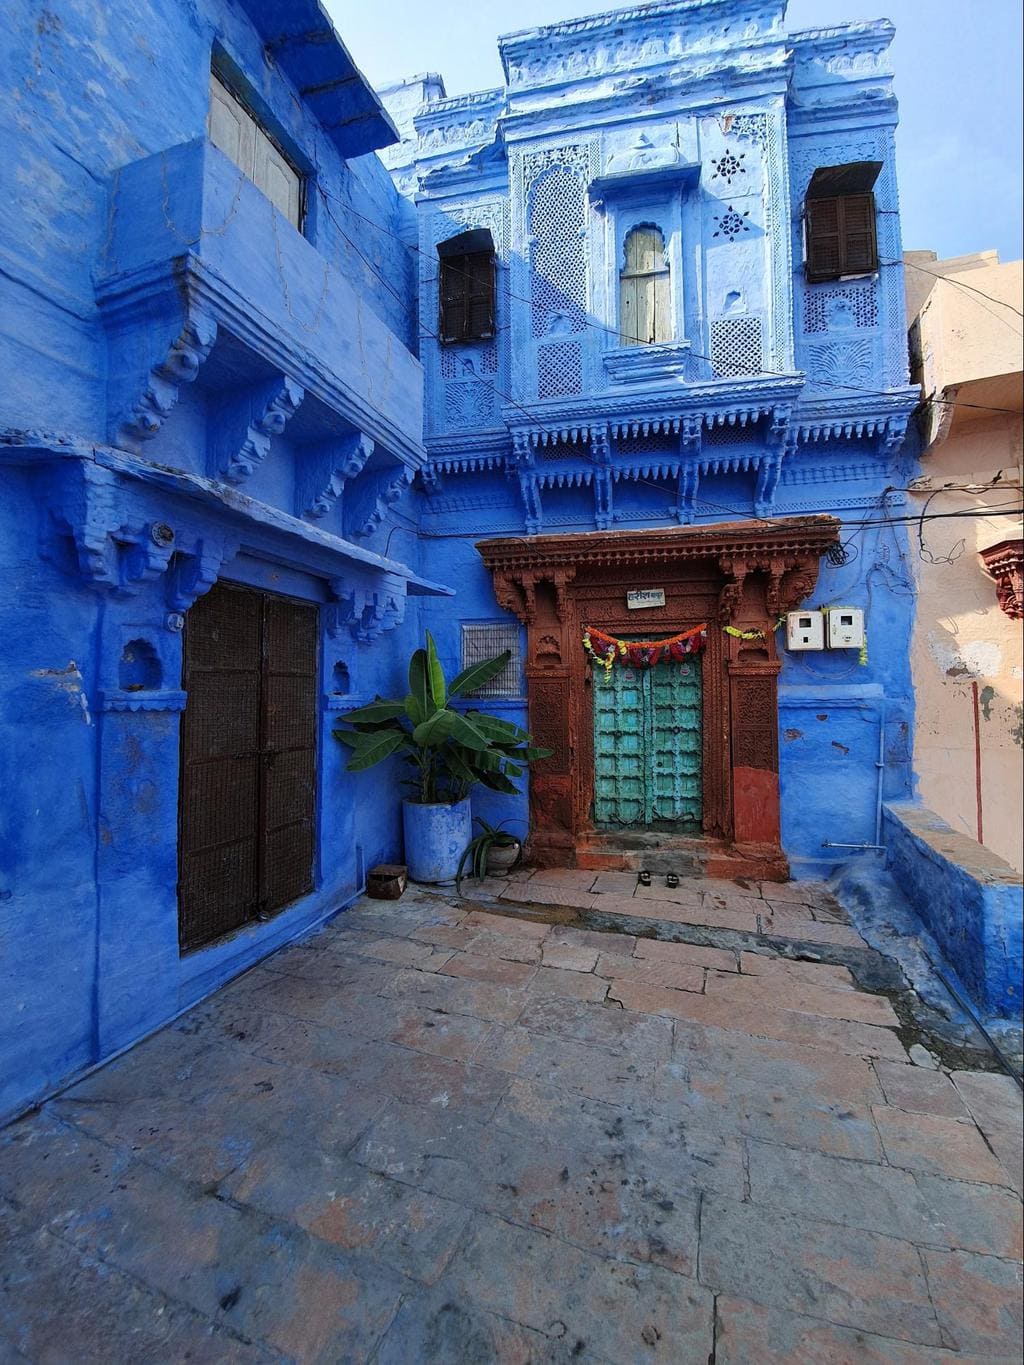 The Blue City of Jodhpur